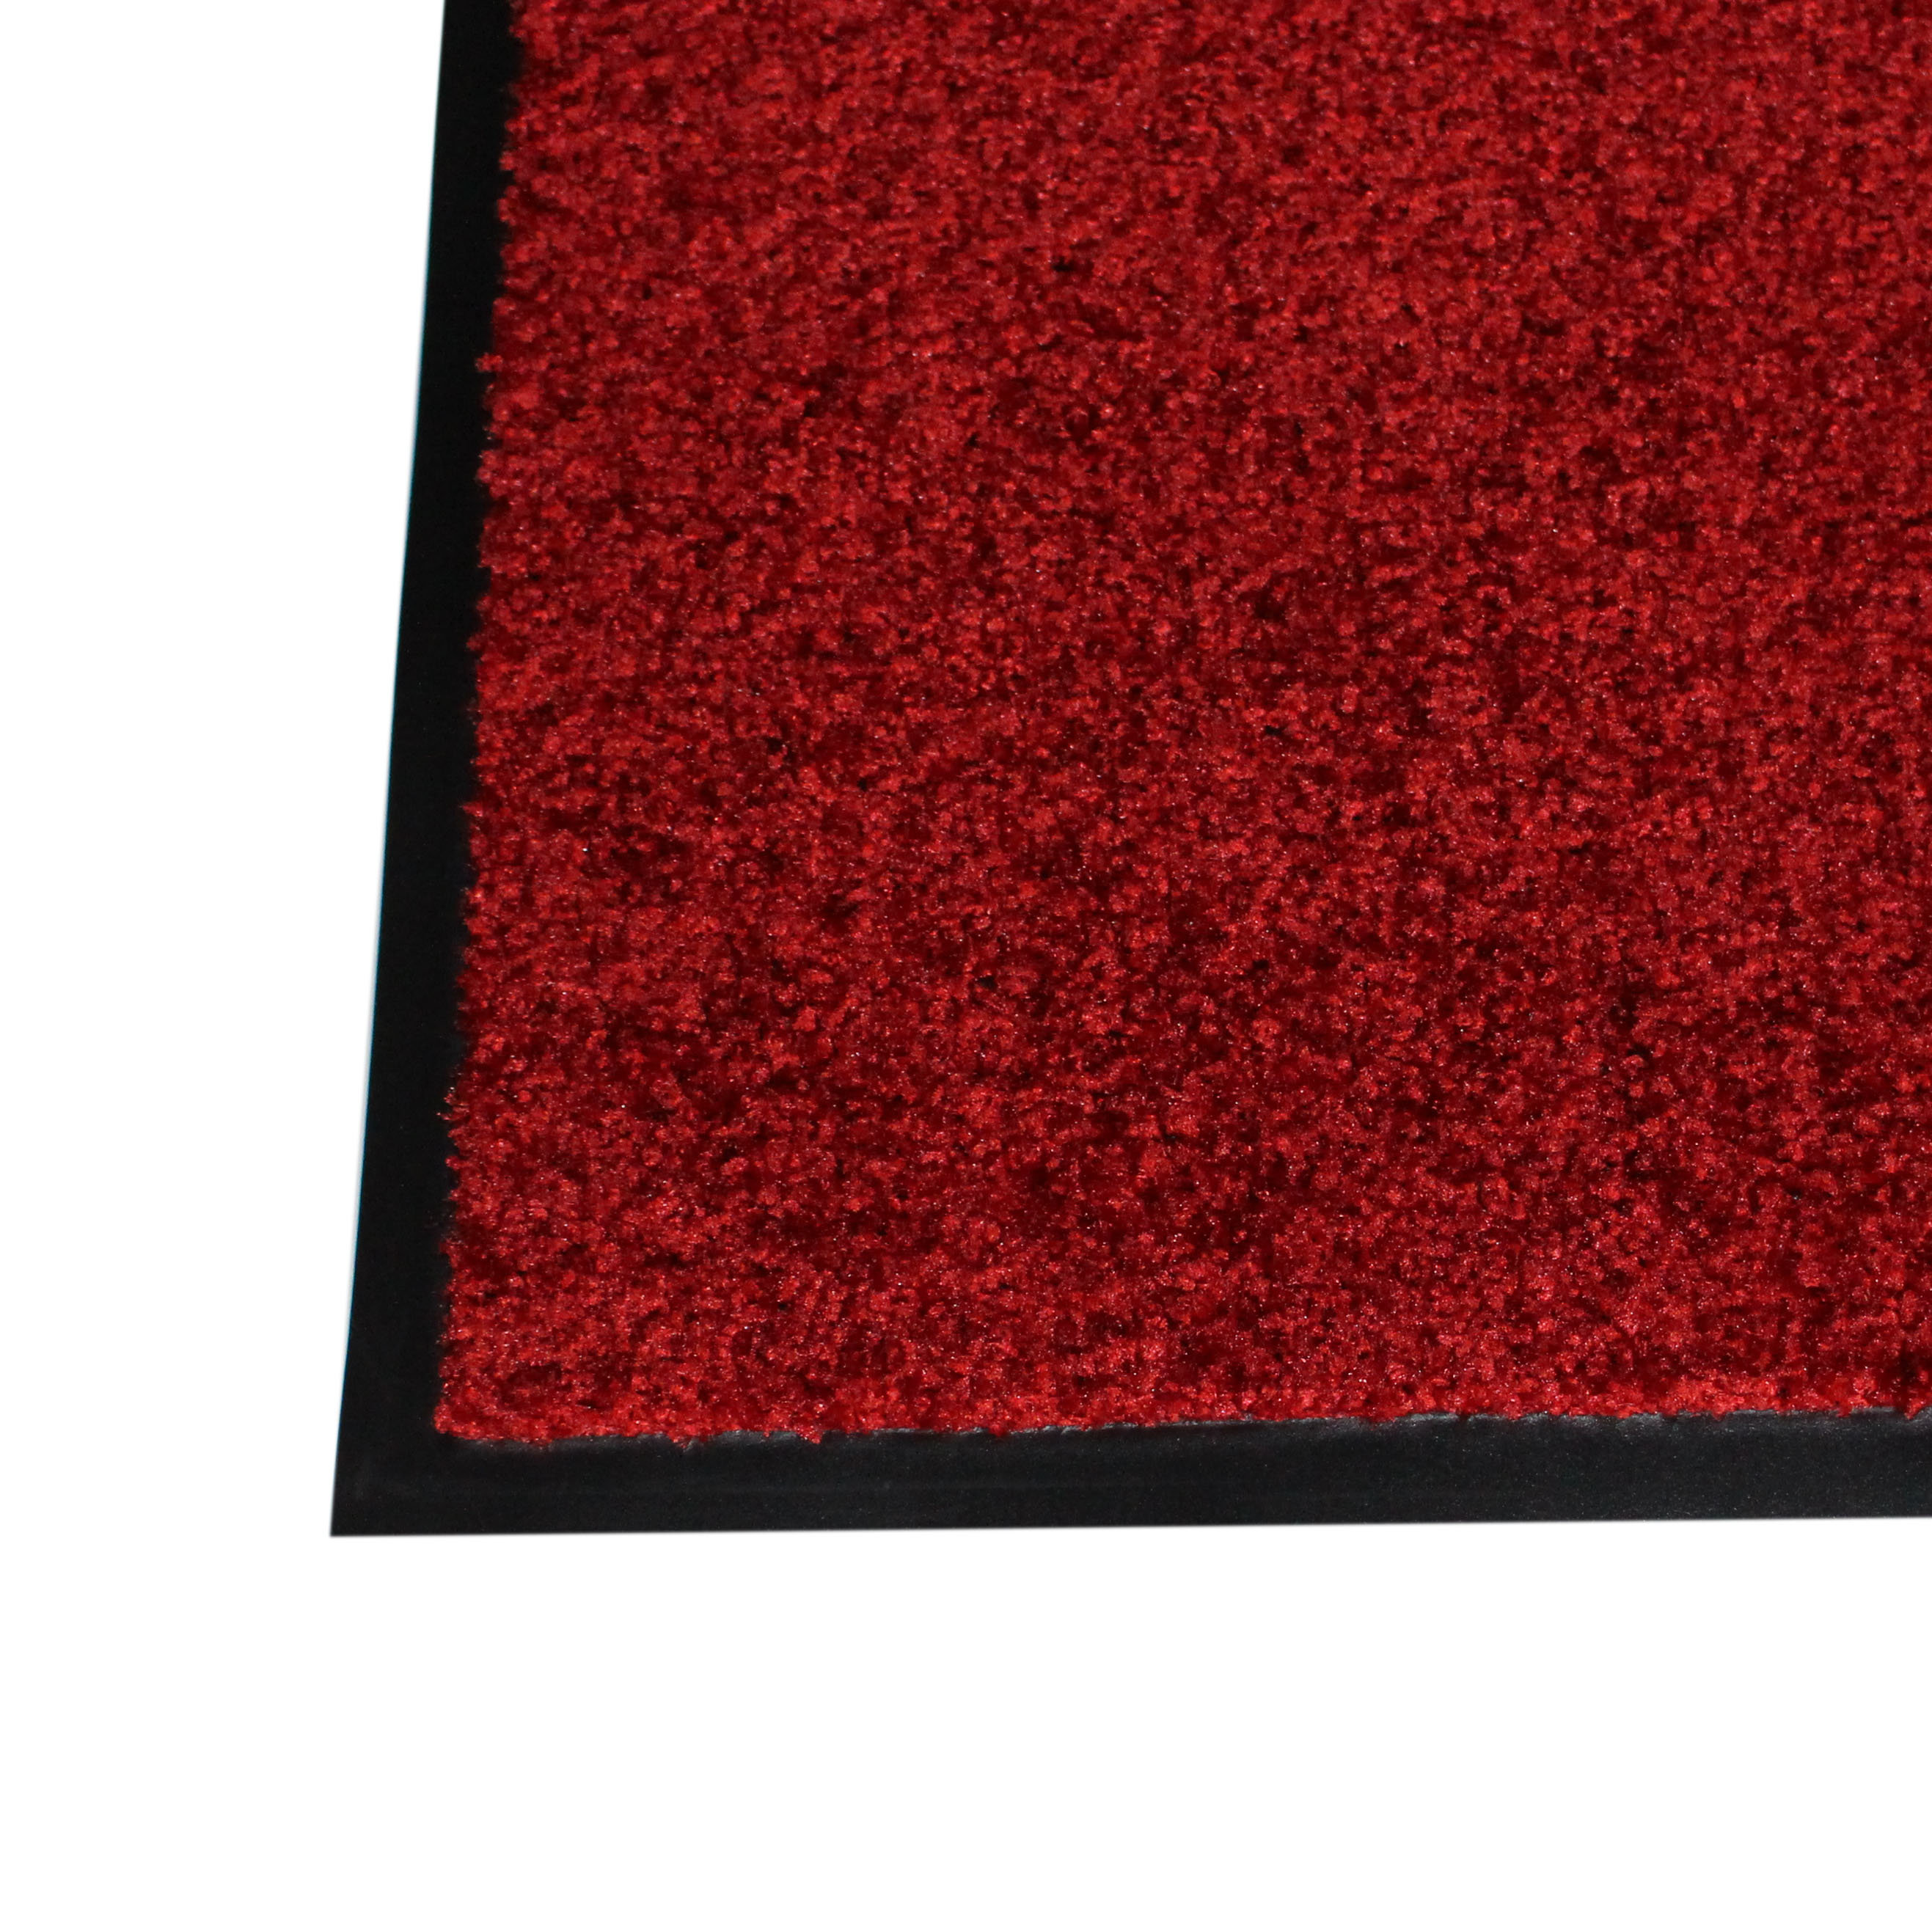 Droogloopmat - Rood - 120 x 180 cm - Rubberen onderrug - 1,5 cm rand - Wash & | Blueflower.nl